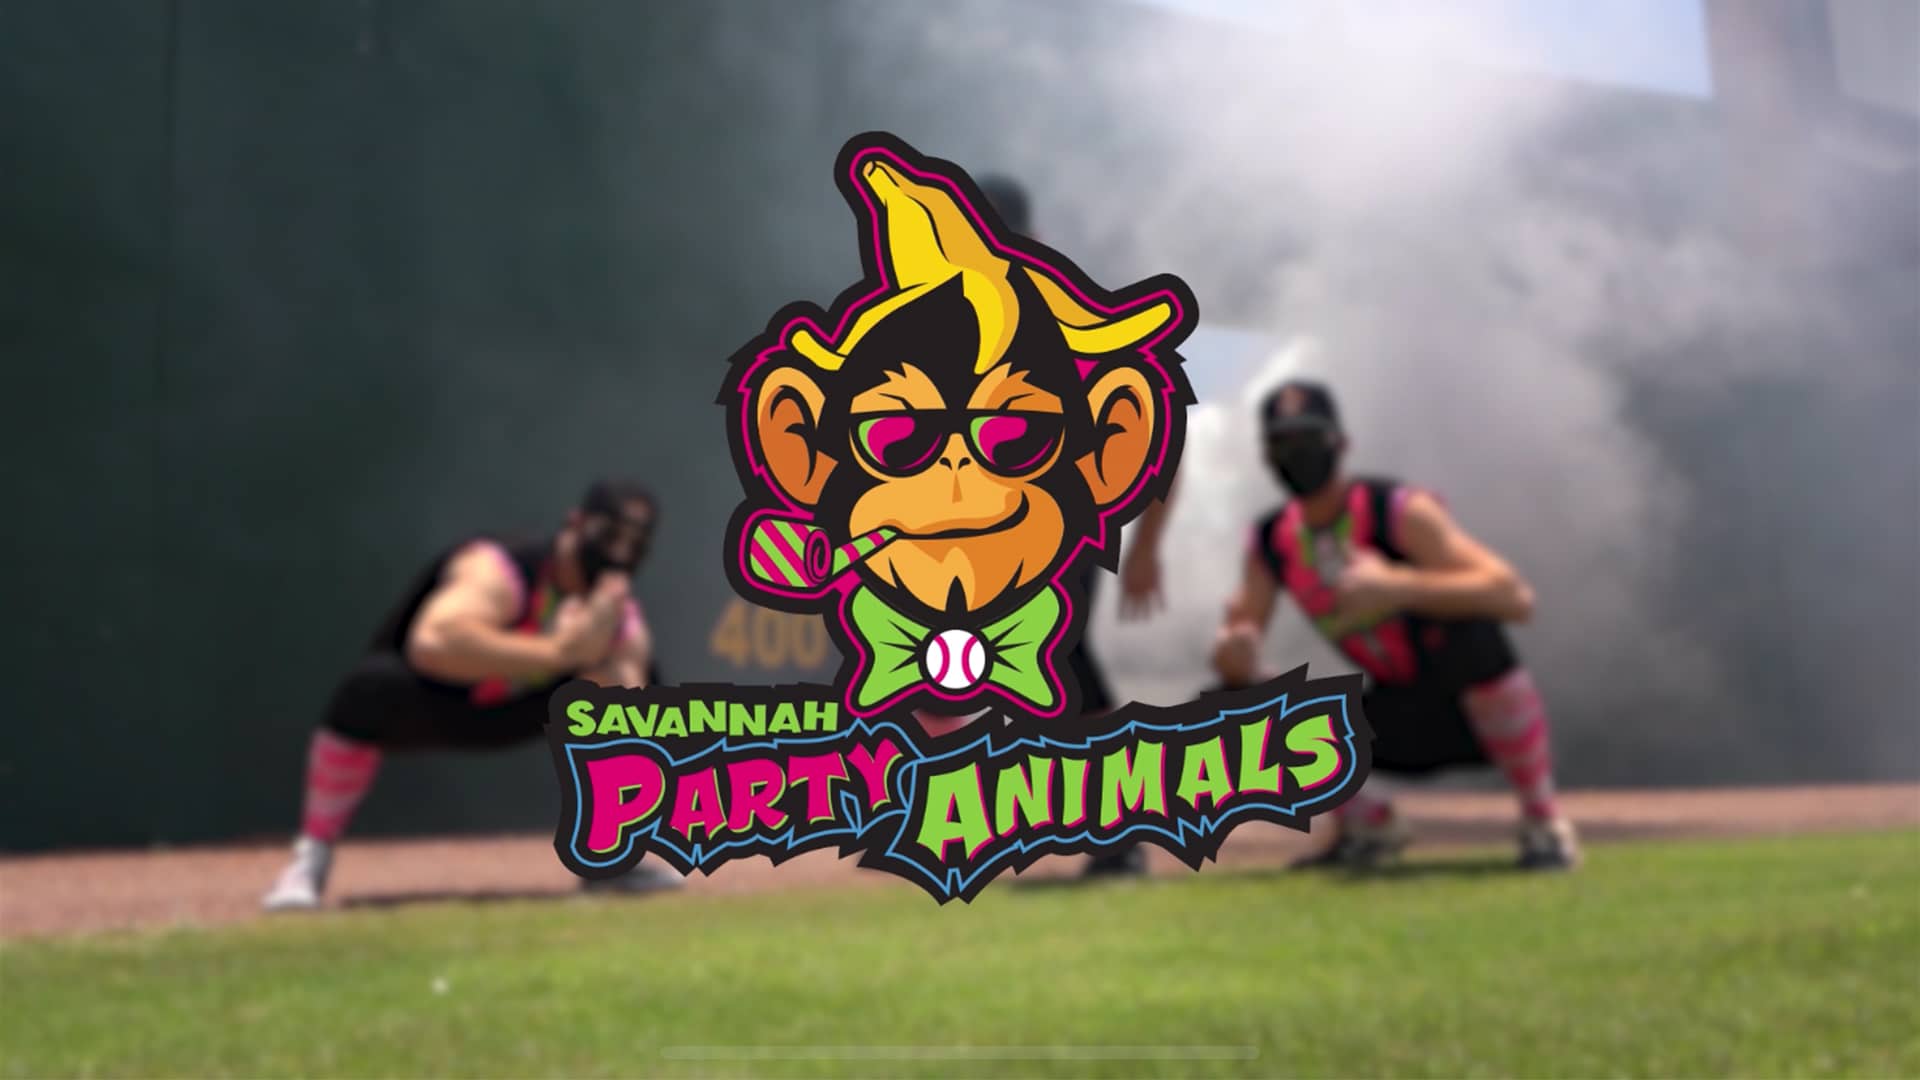 Introducing the Savannah Party Animals